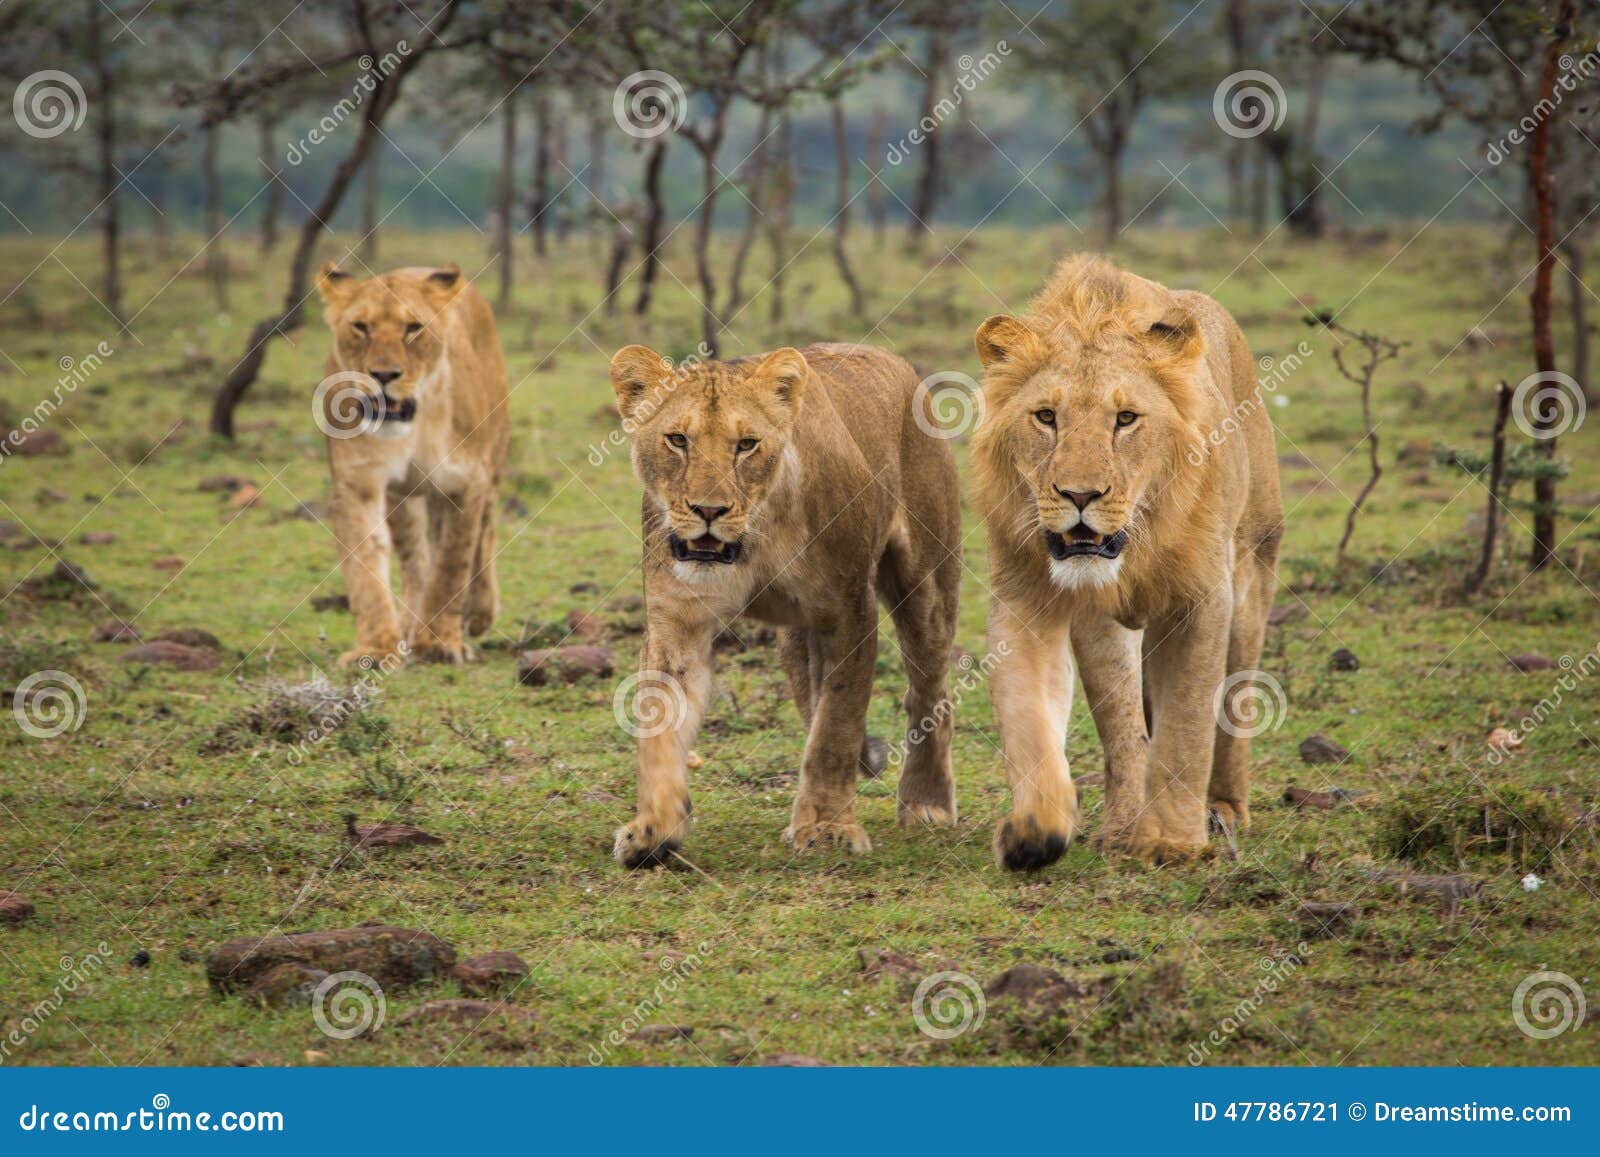 lions walking